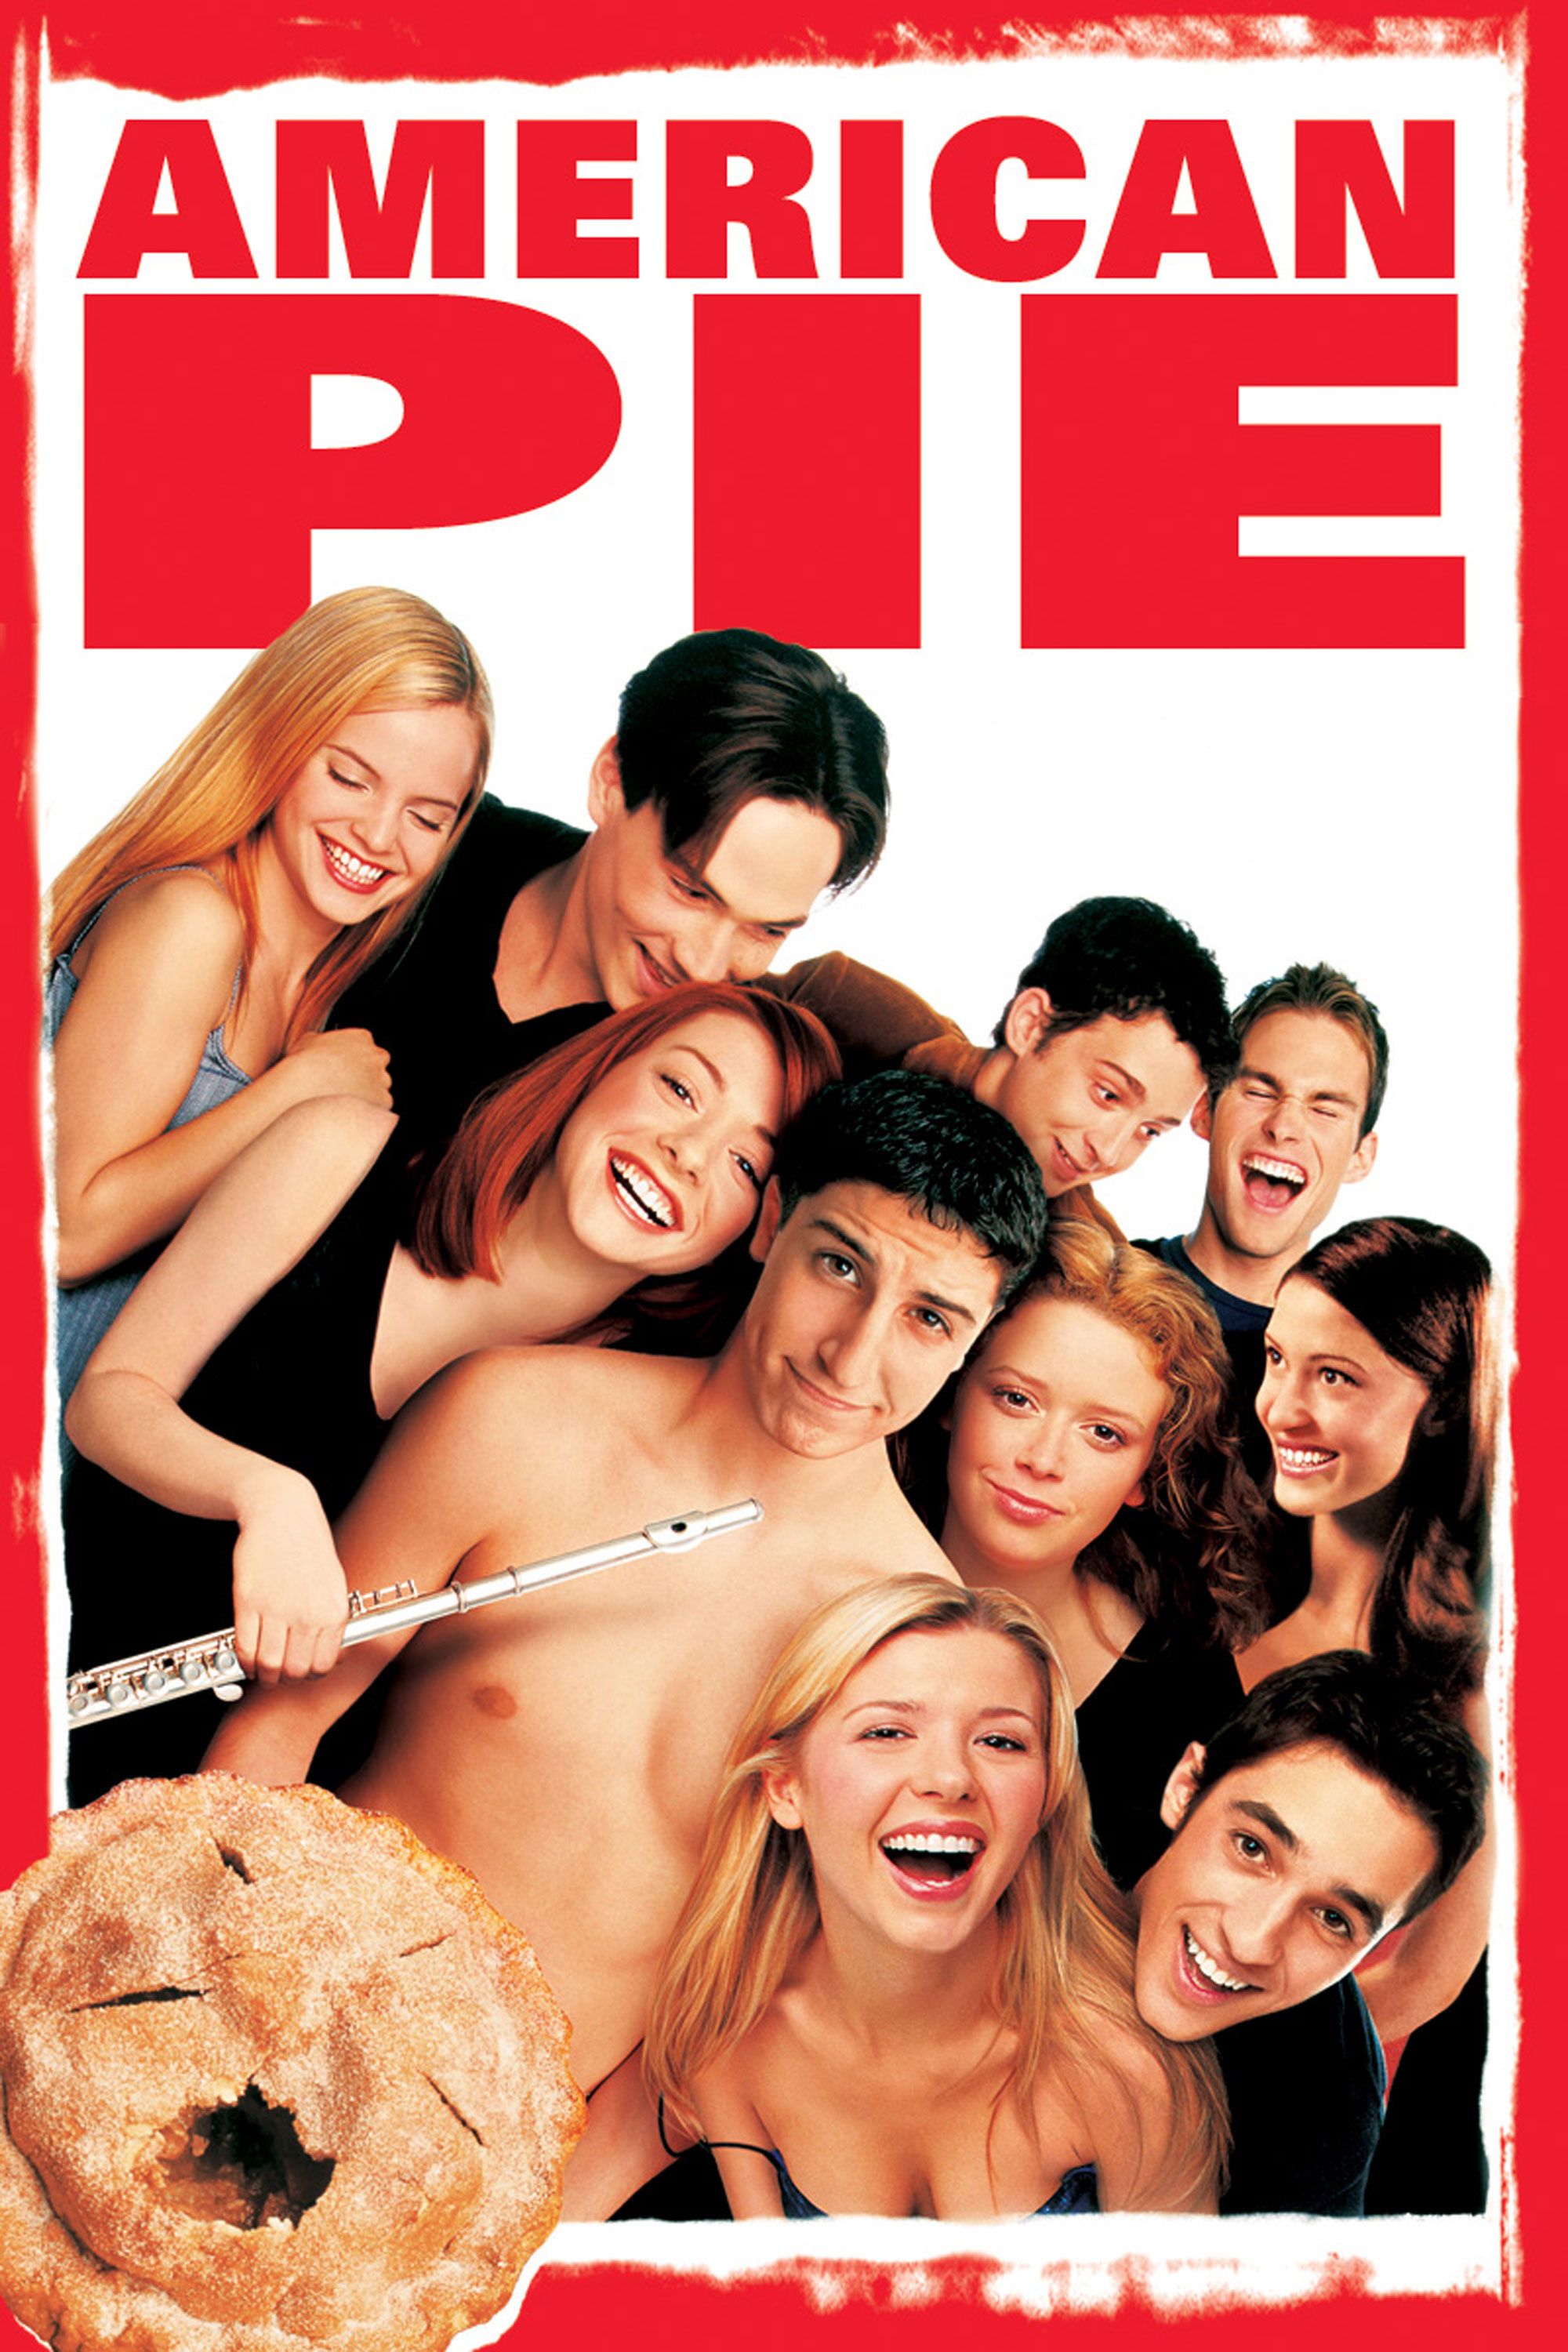 American pie full movie